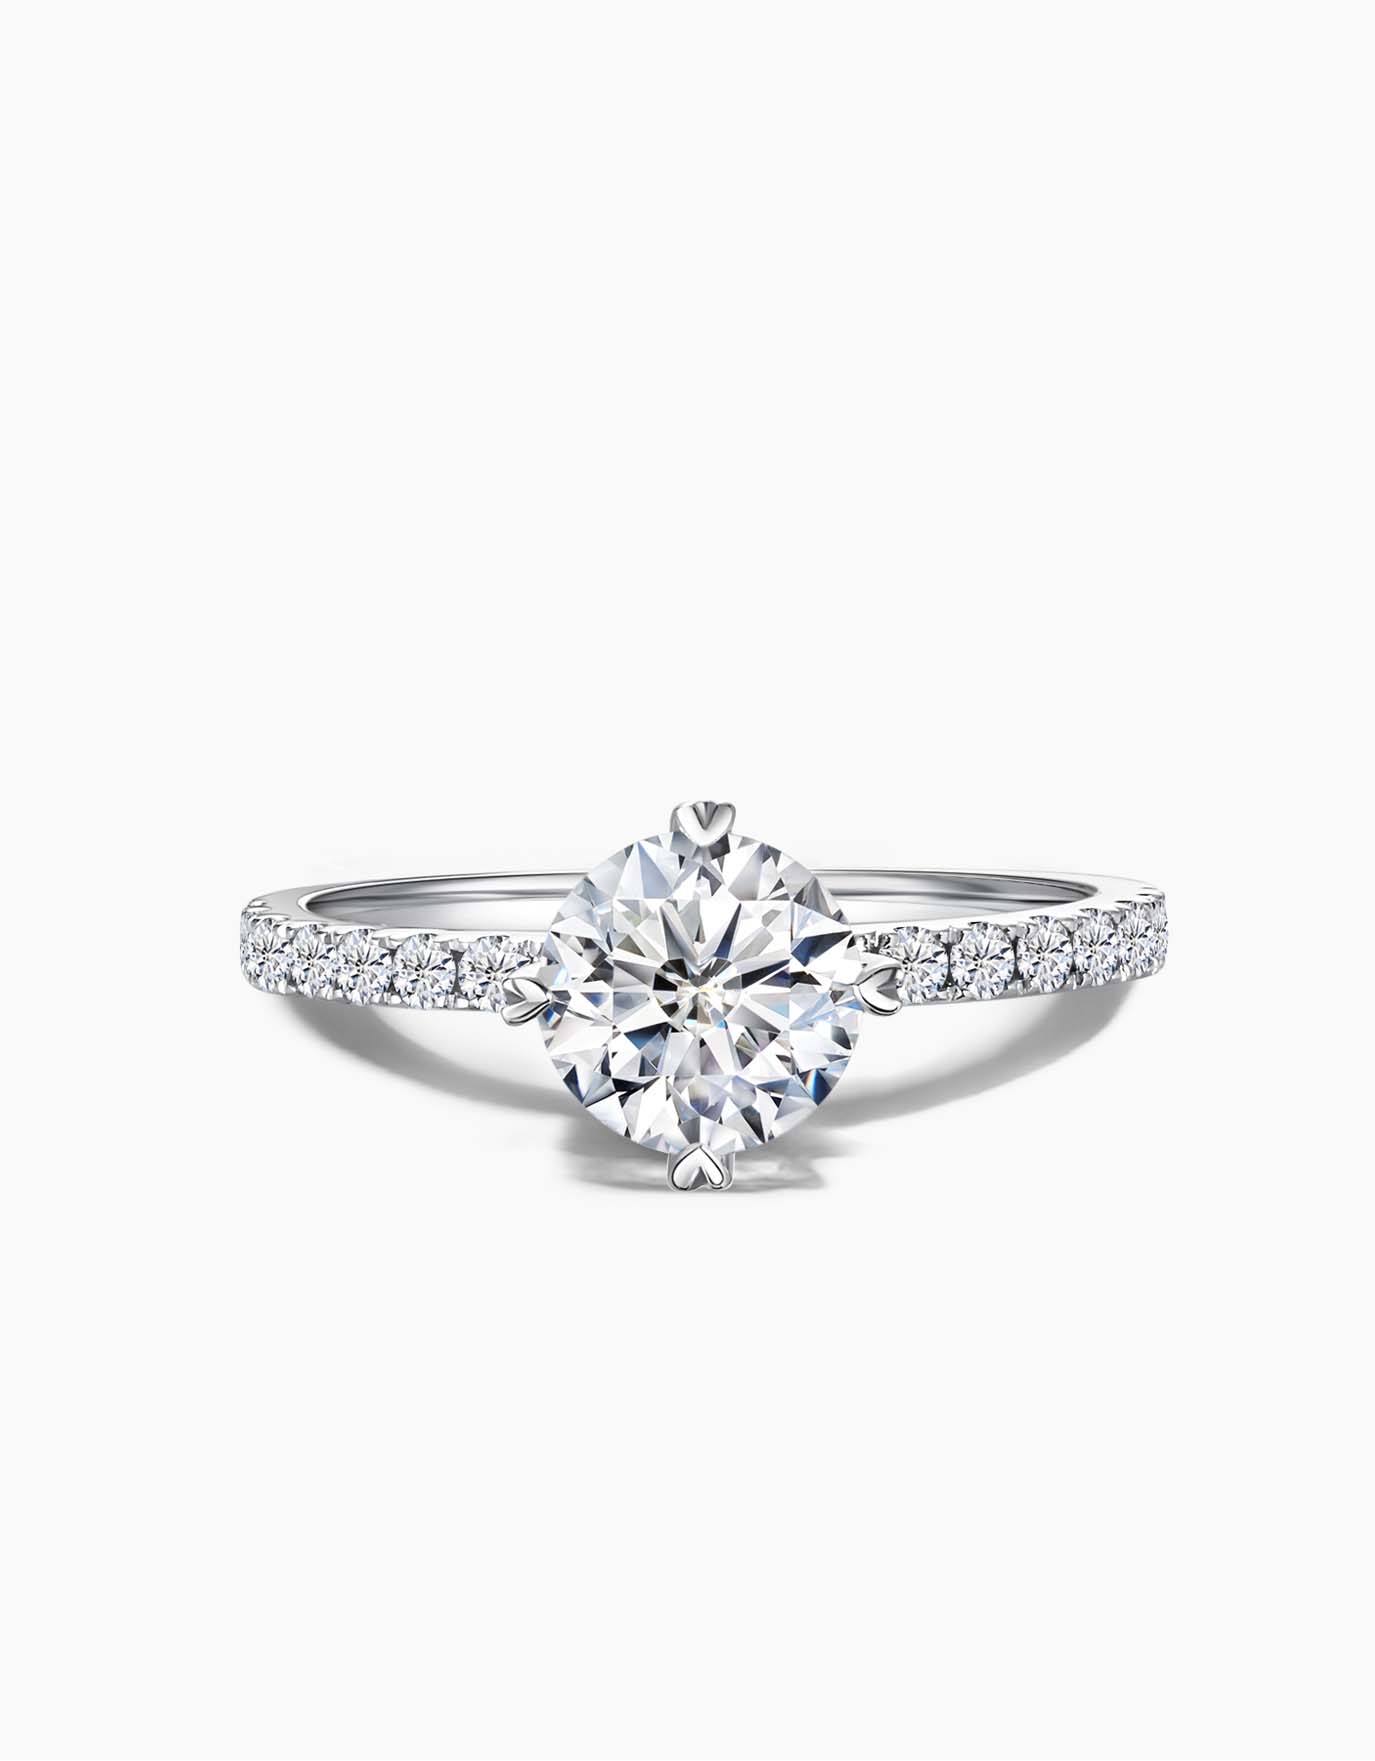 LVC Say Love™ Elena Diamond Ring - 0.7ct